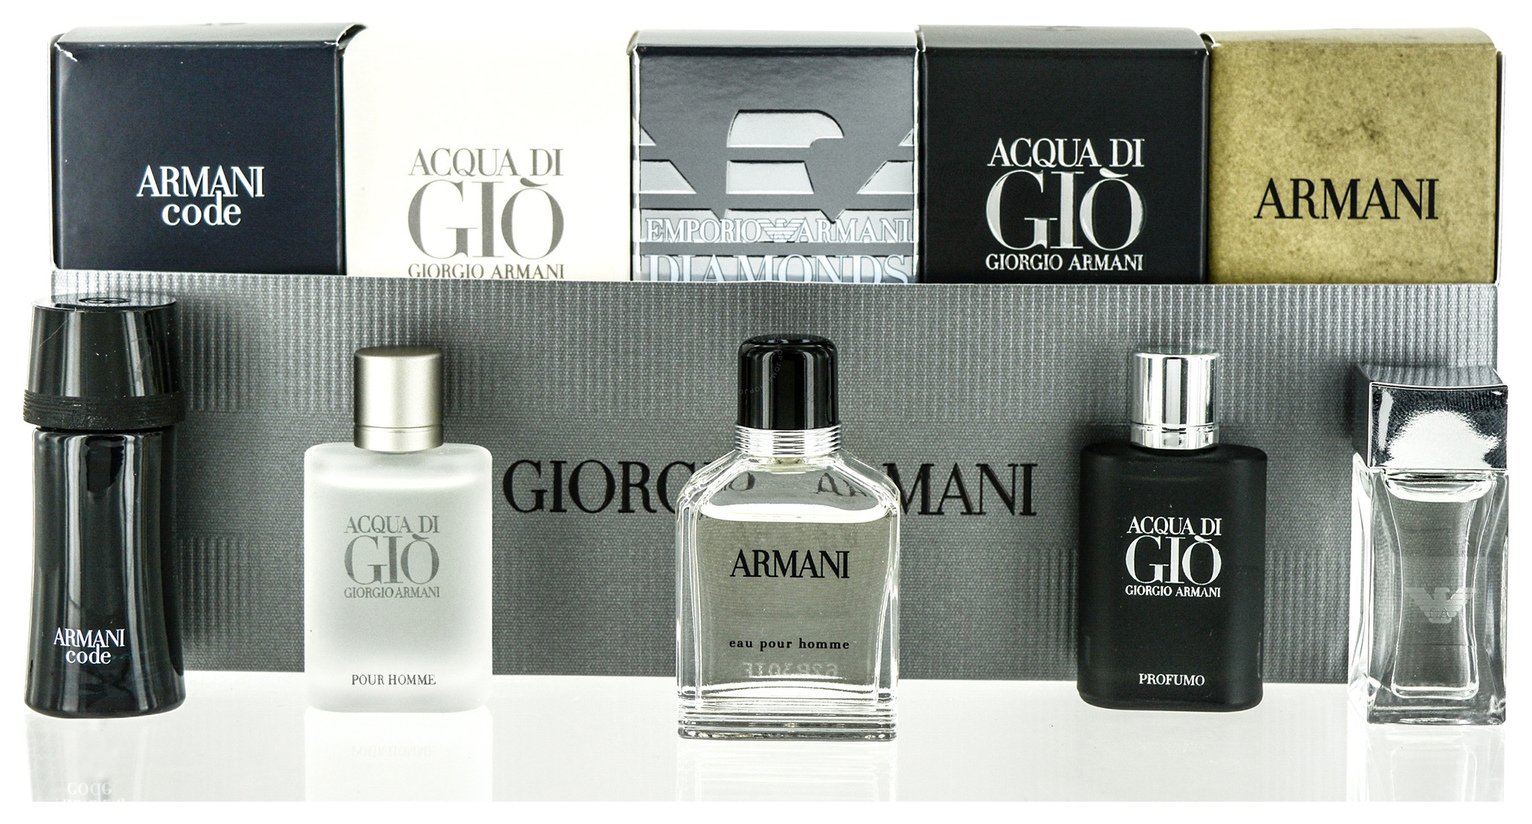 armani men's cologne gift sets